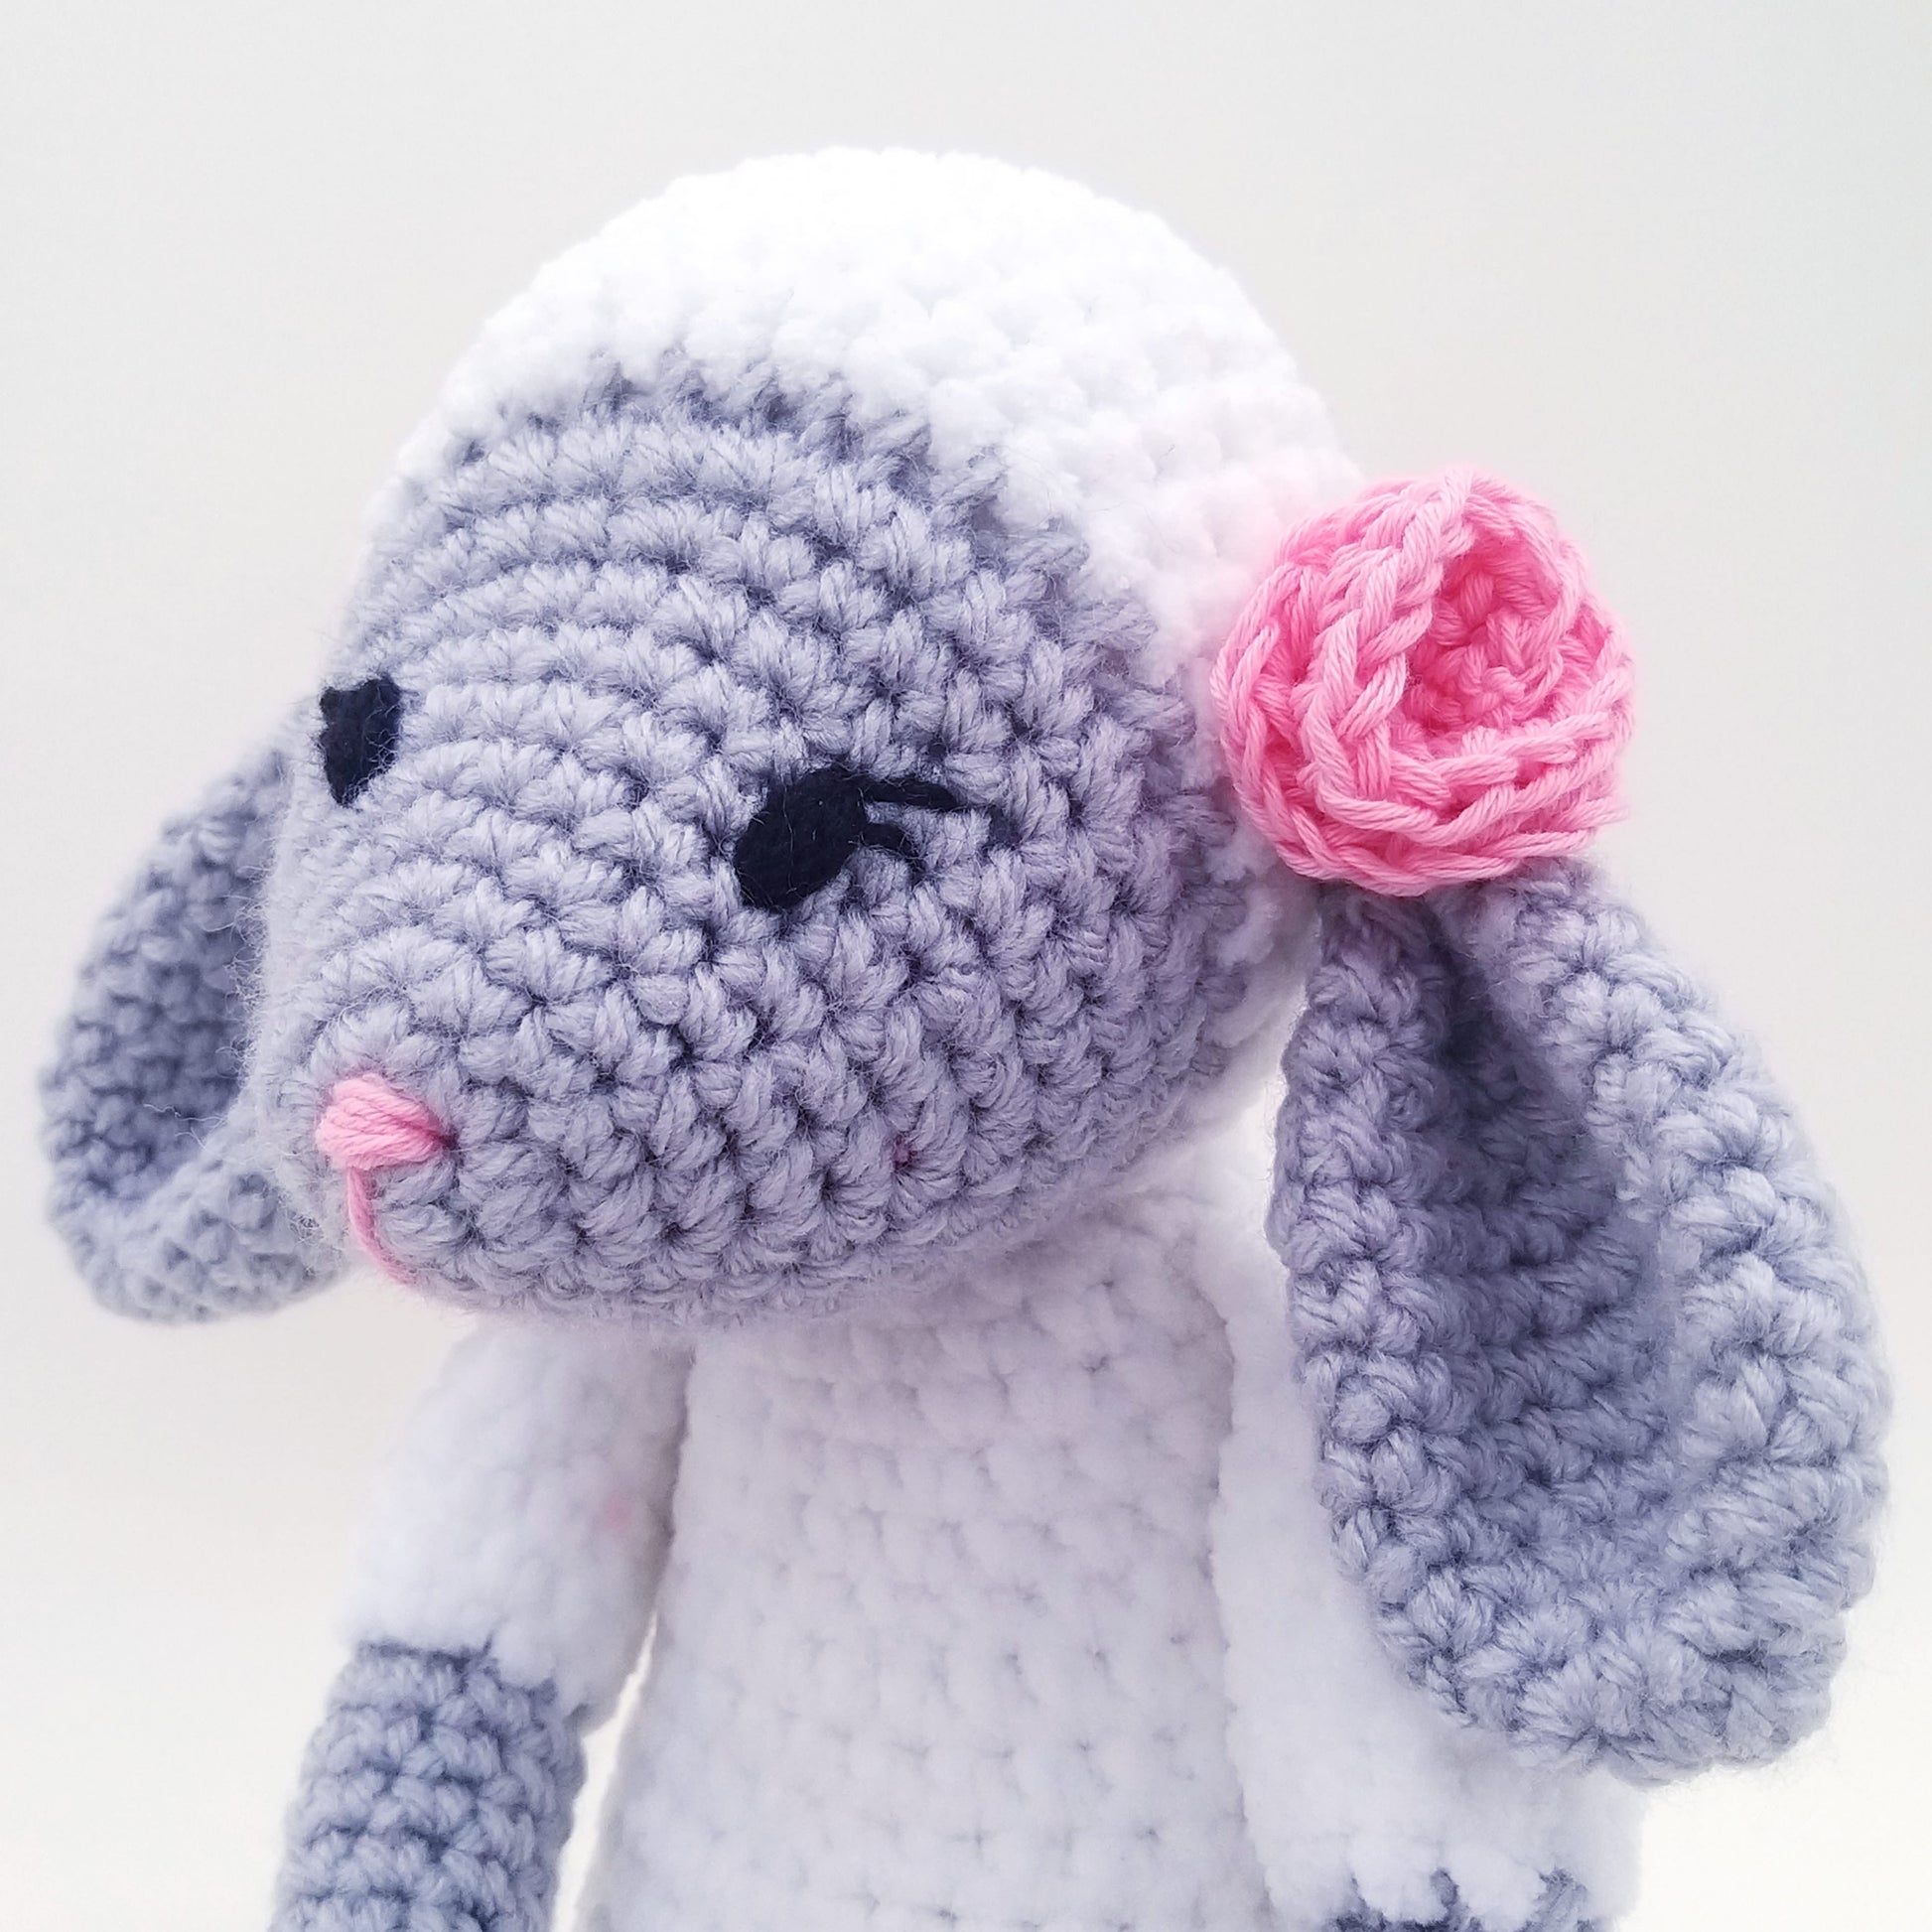 Profile - crochet lamb